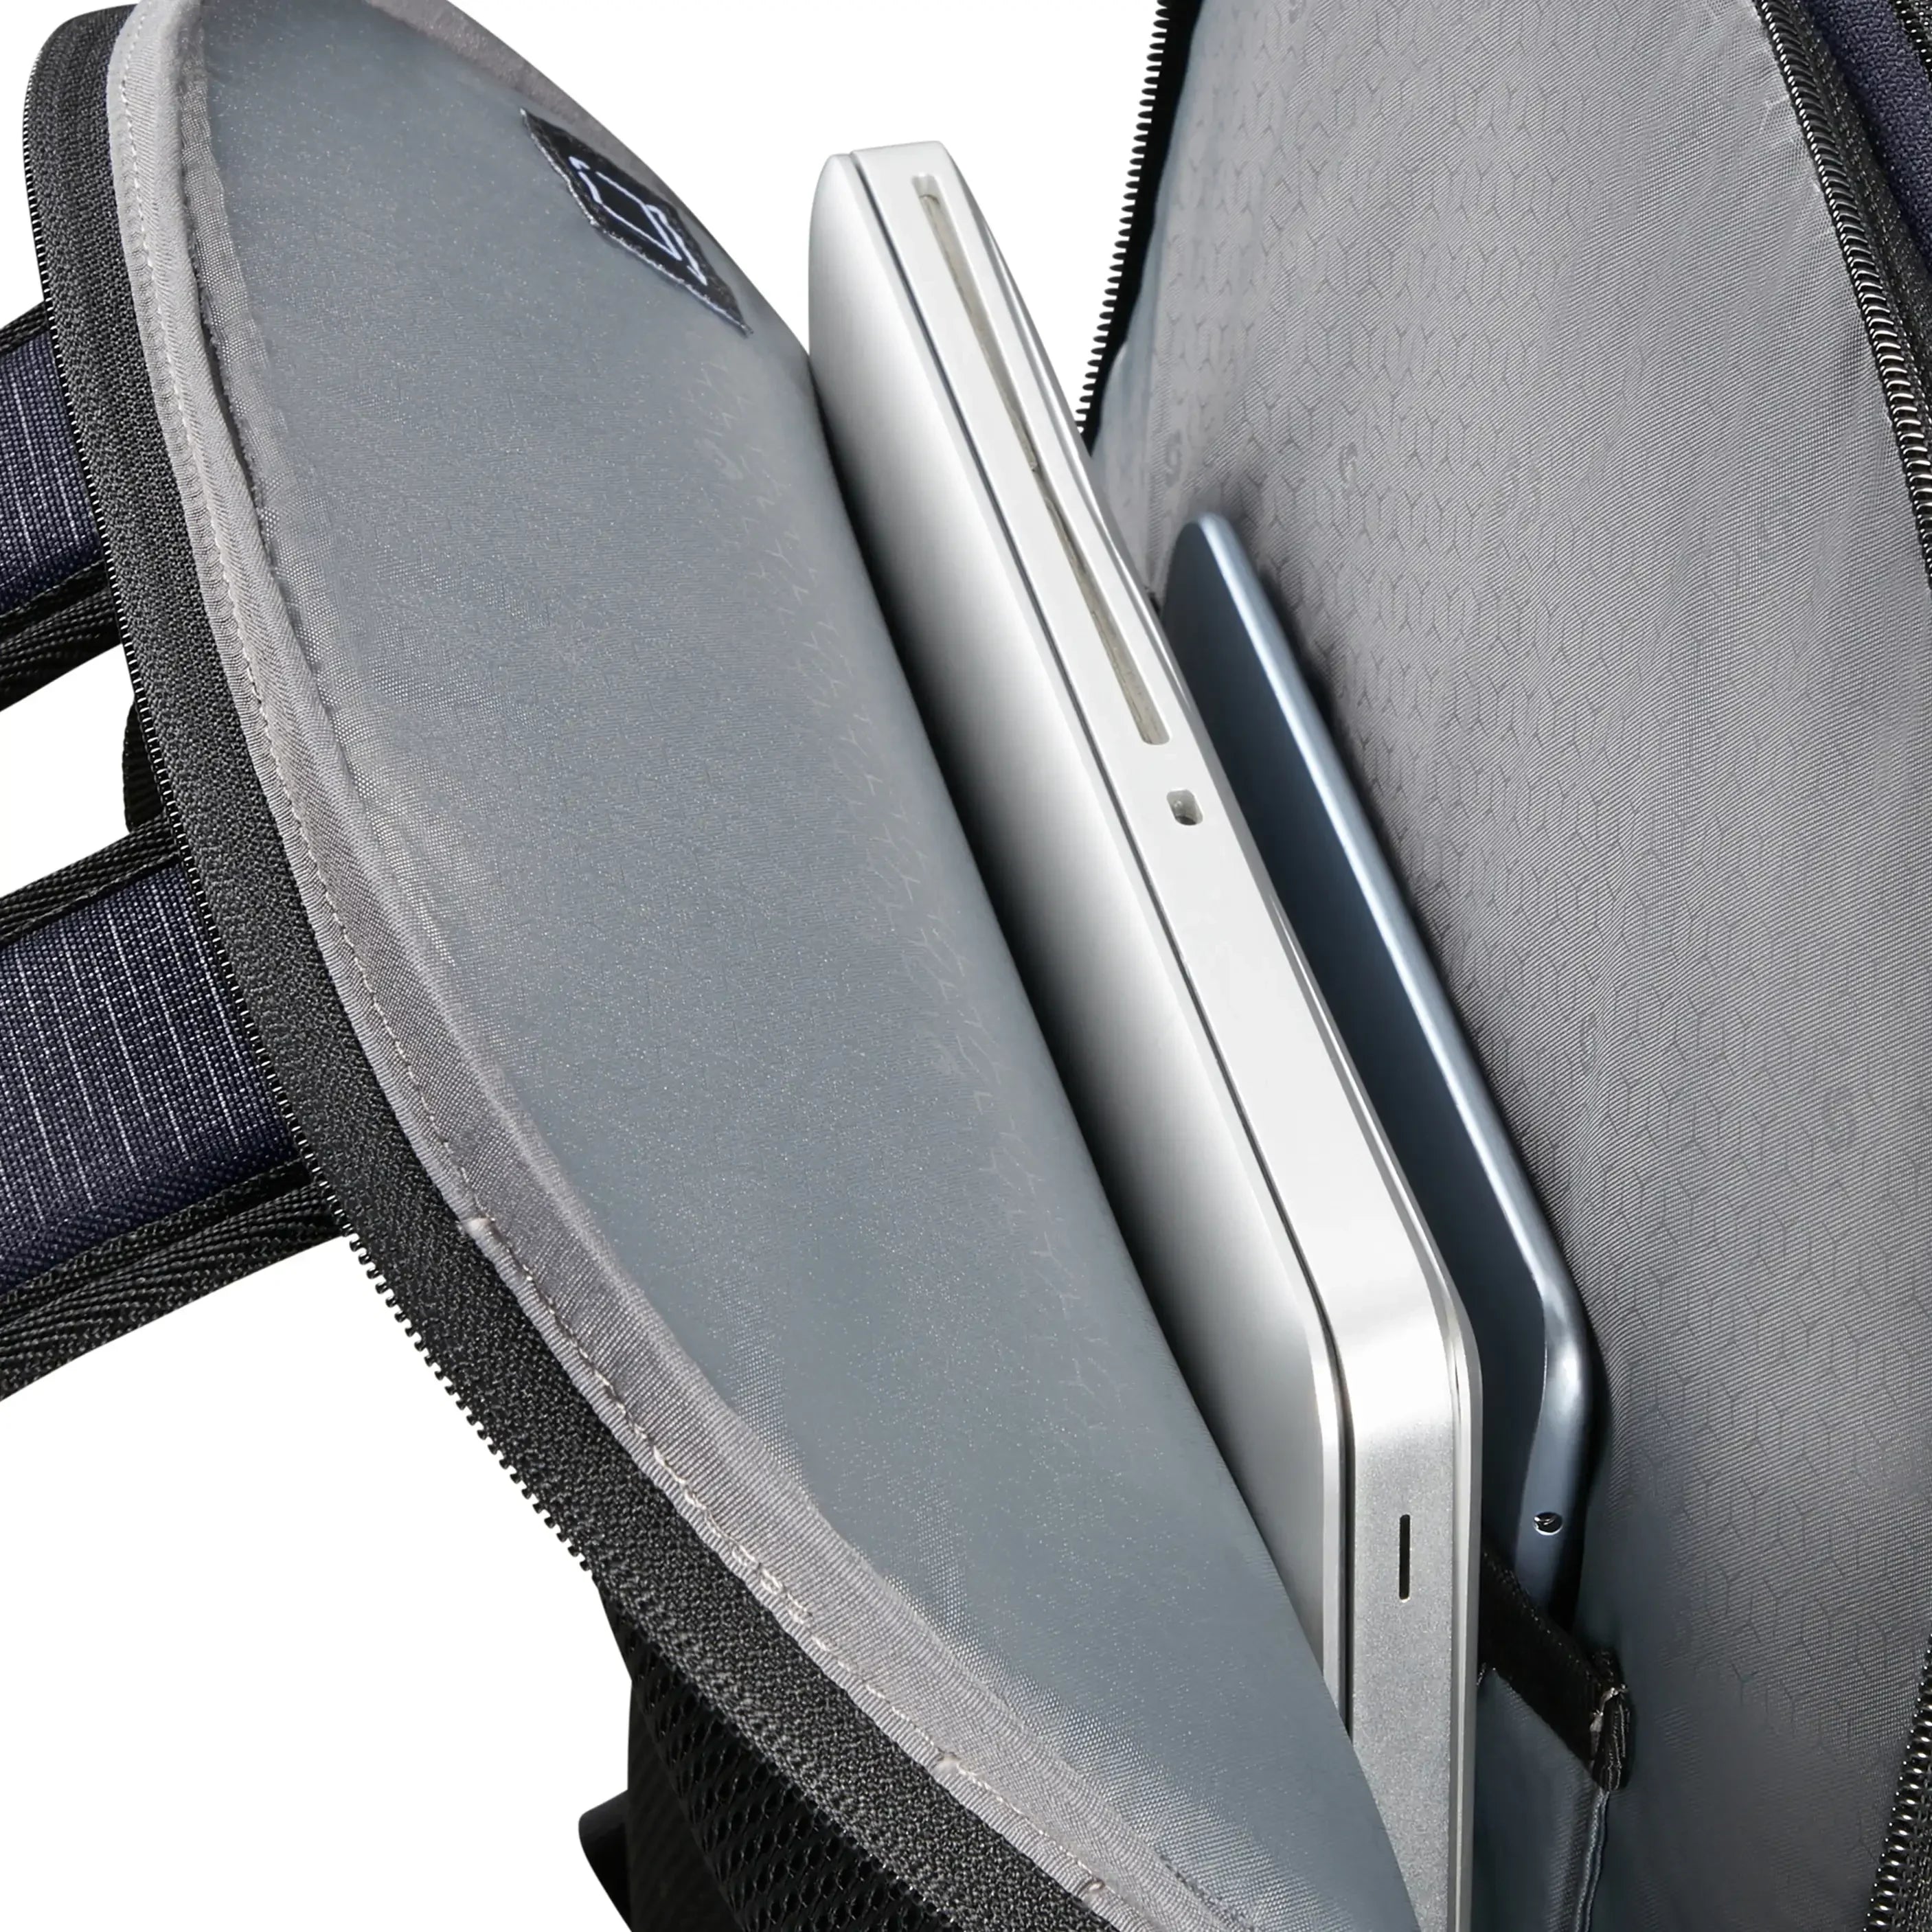 Samsonite Roader Laptop Backpack L 46 cm - dark blue